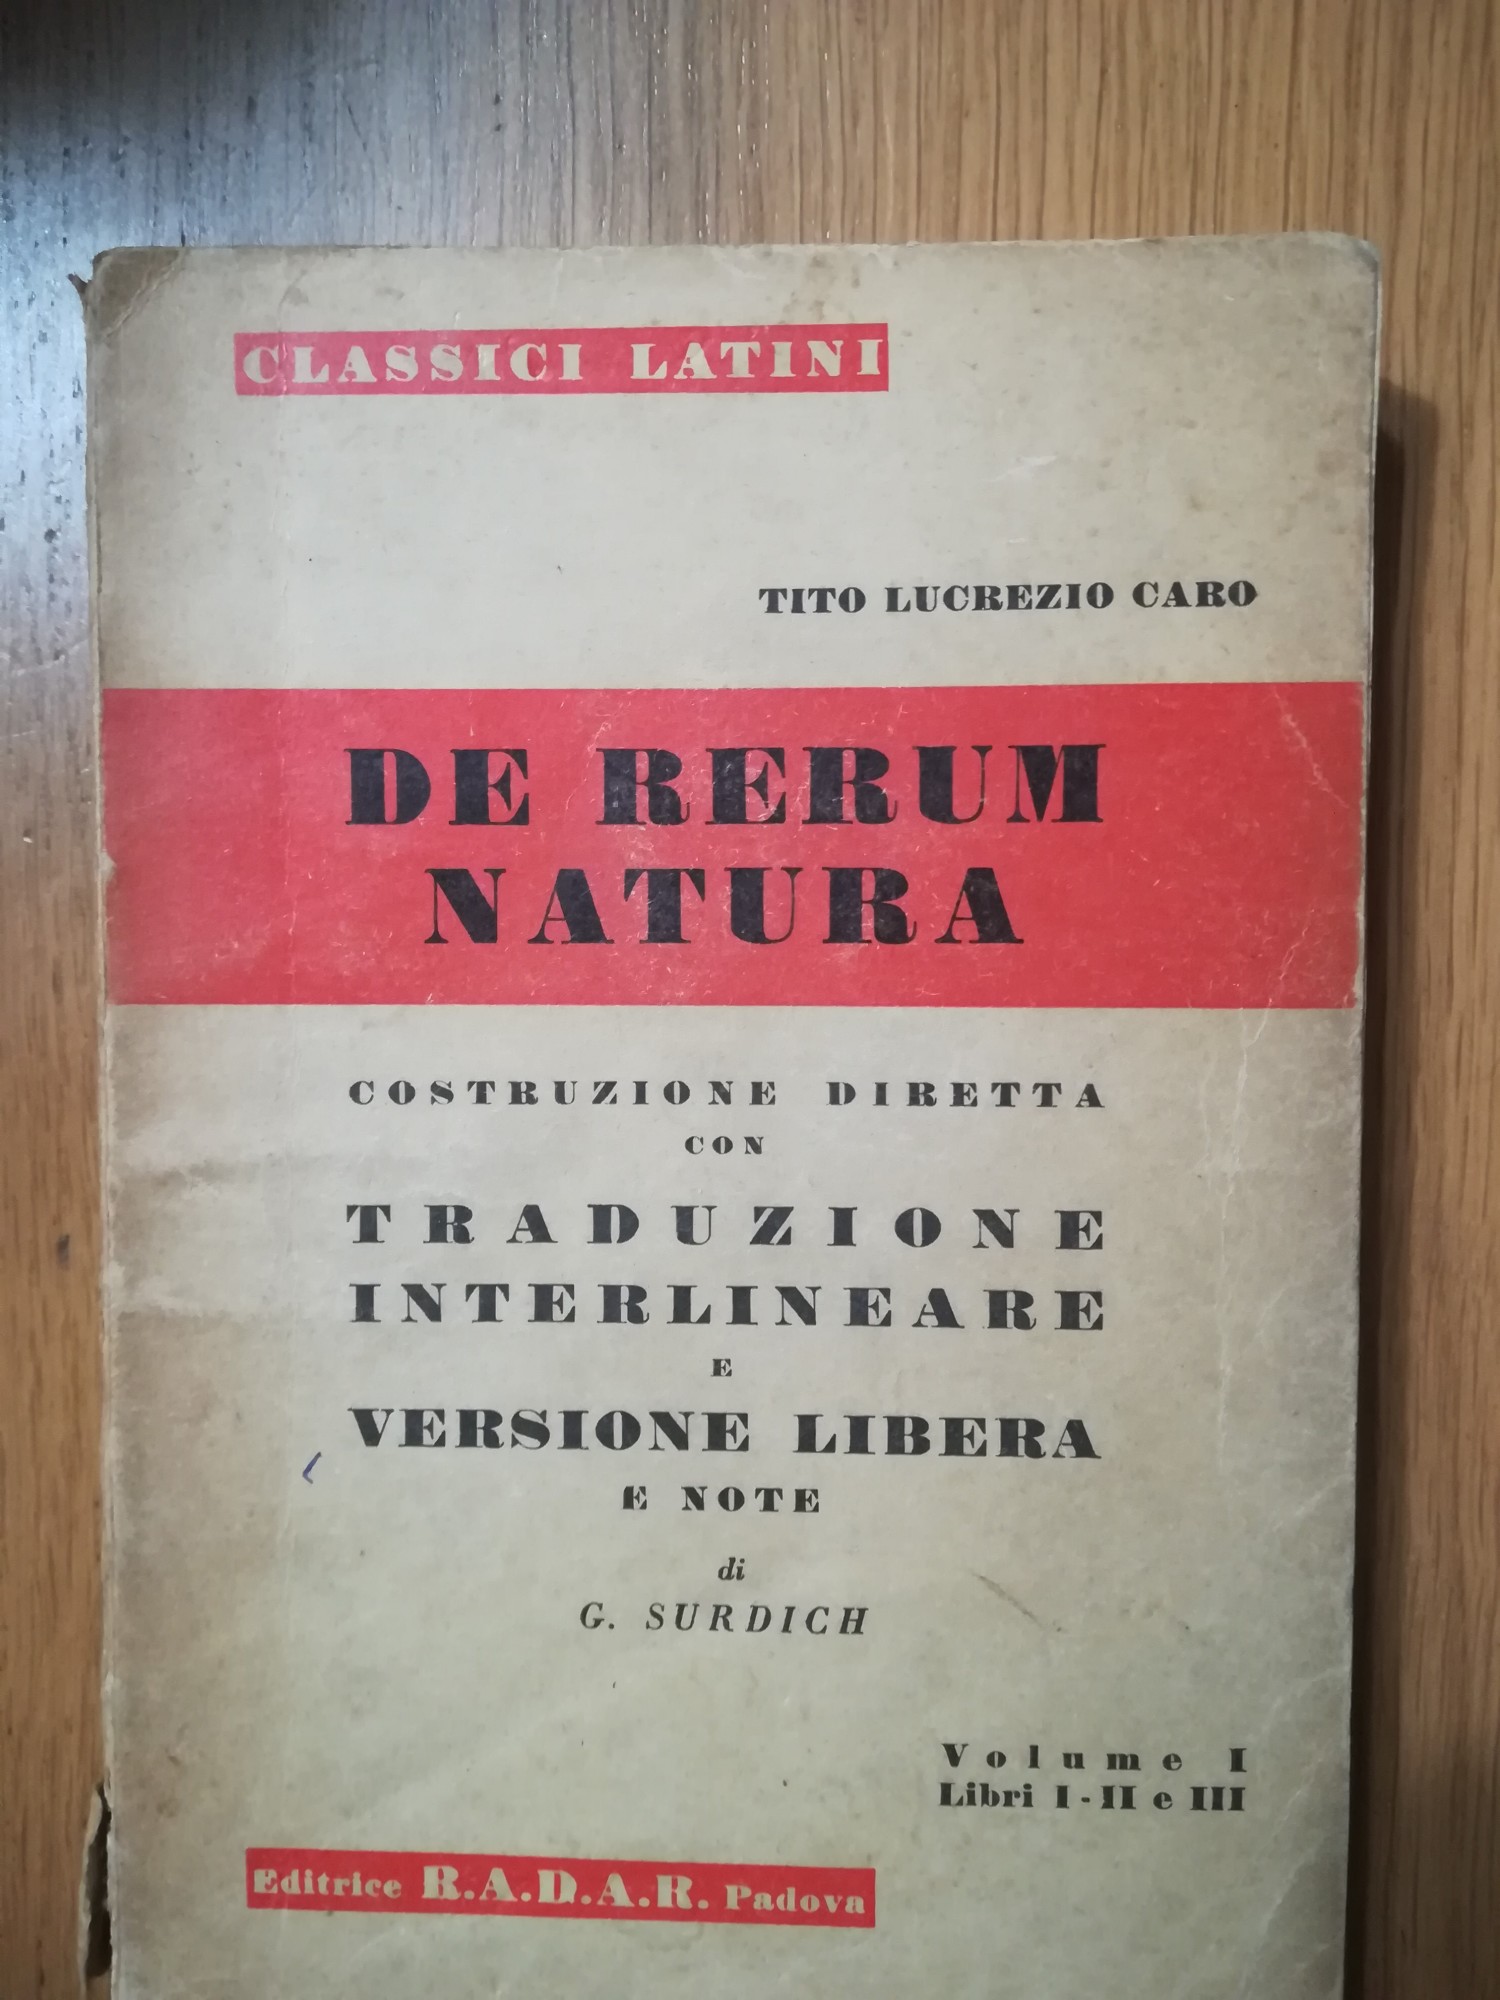 De rerum natura - Tito Lucrezio Caro